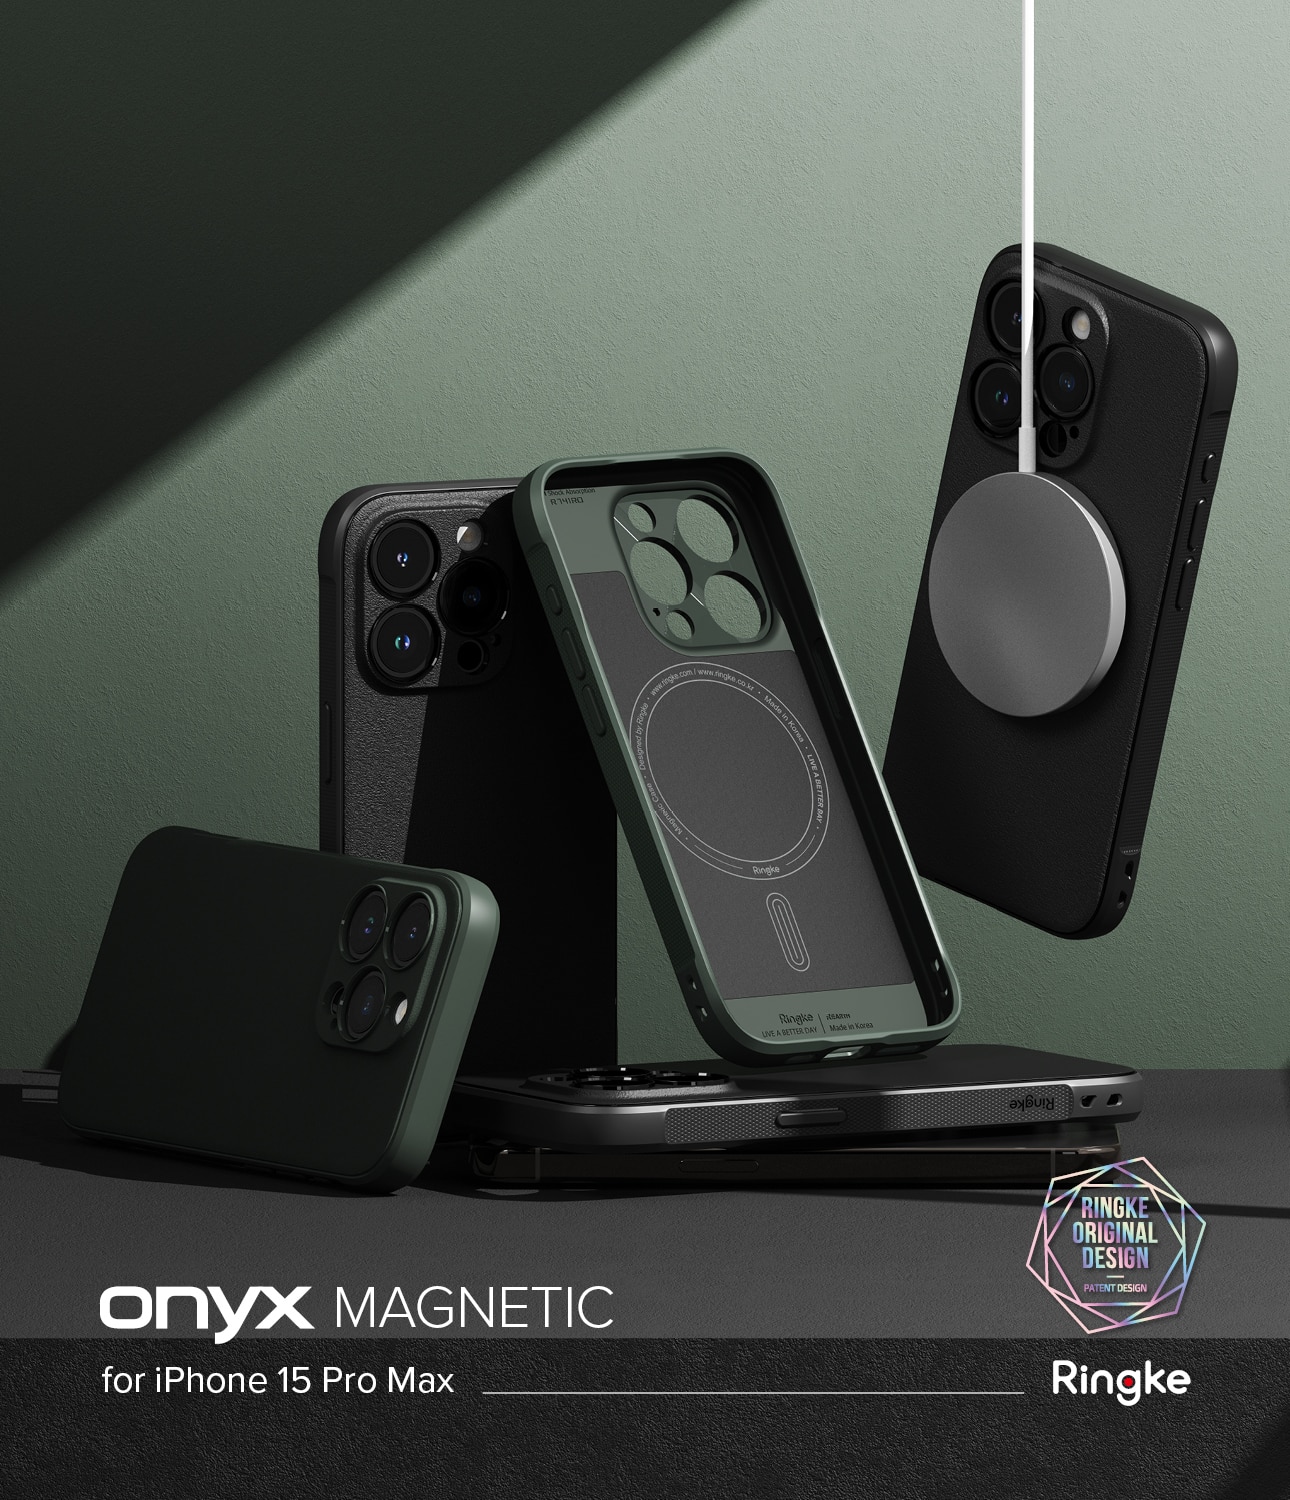 Coque Onyx Magnetic iPhone 15 Pro Max, Black